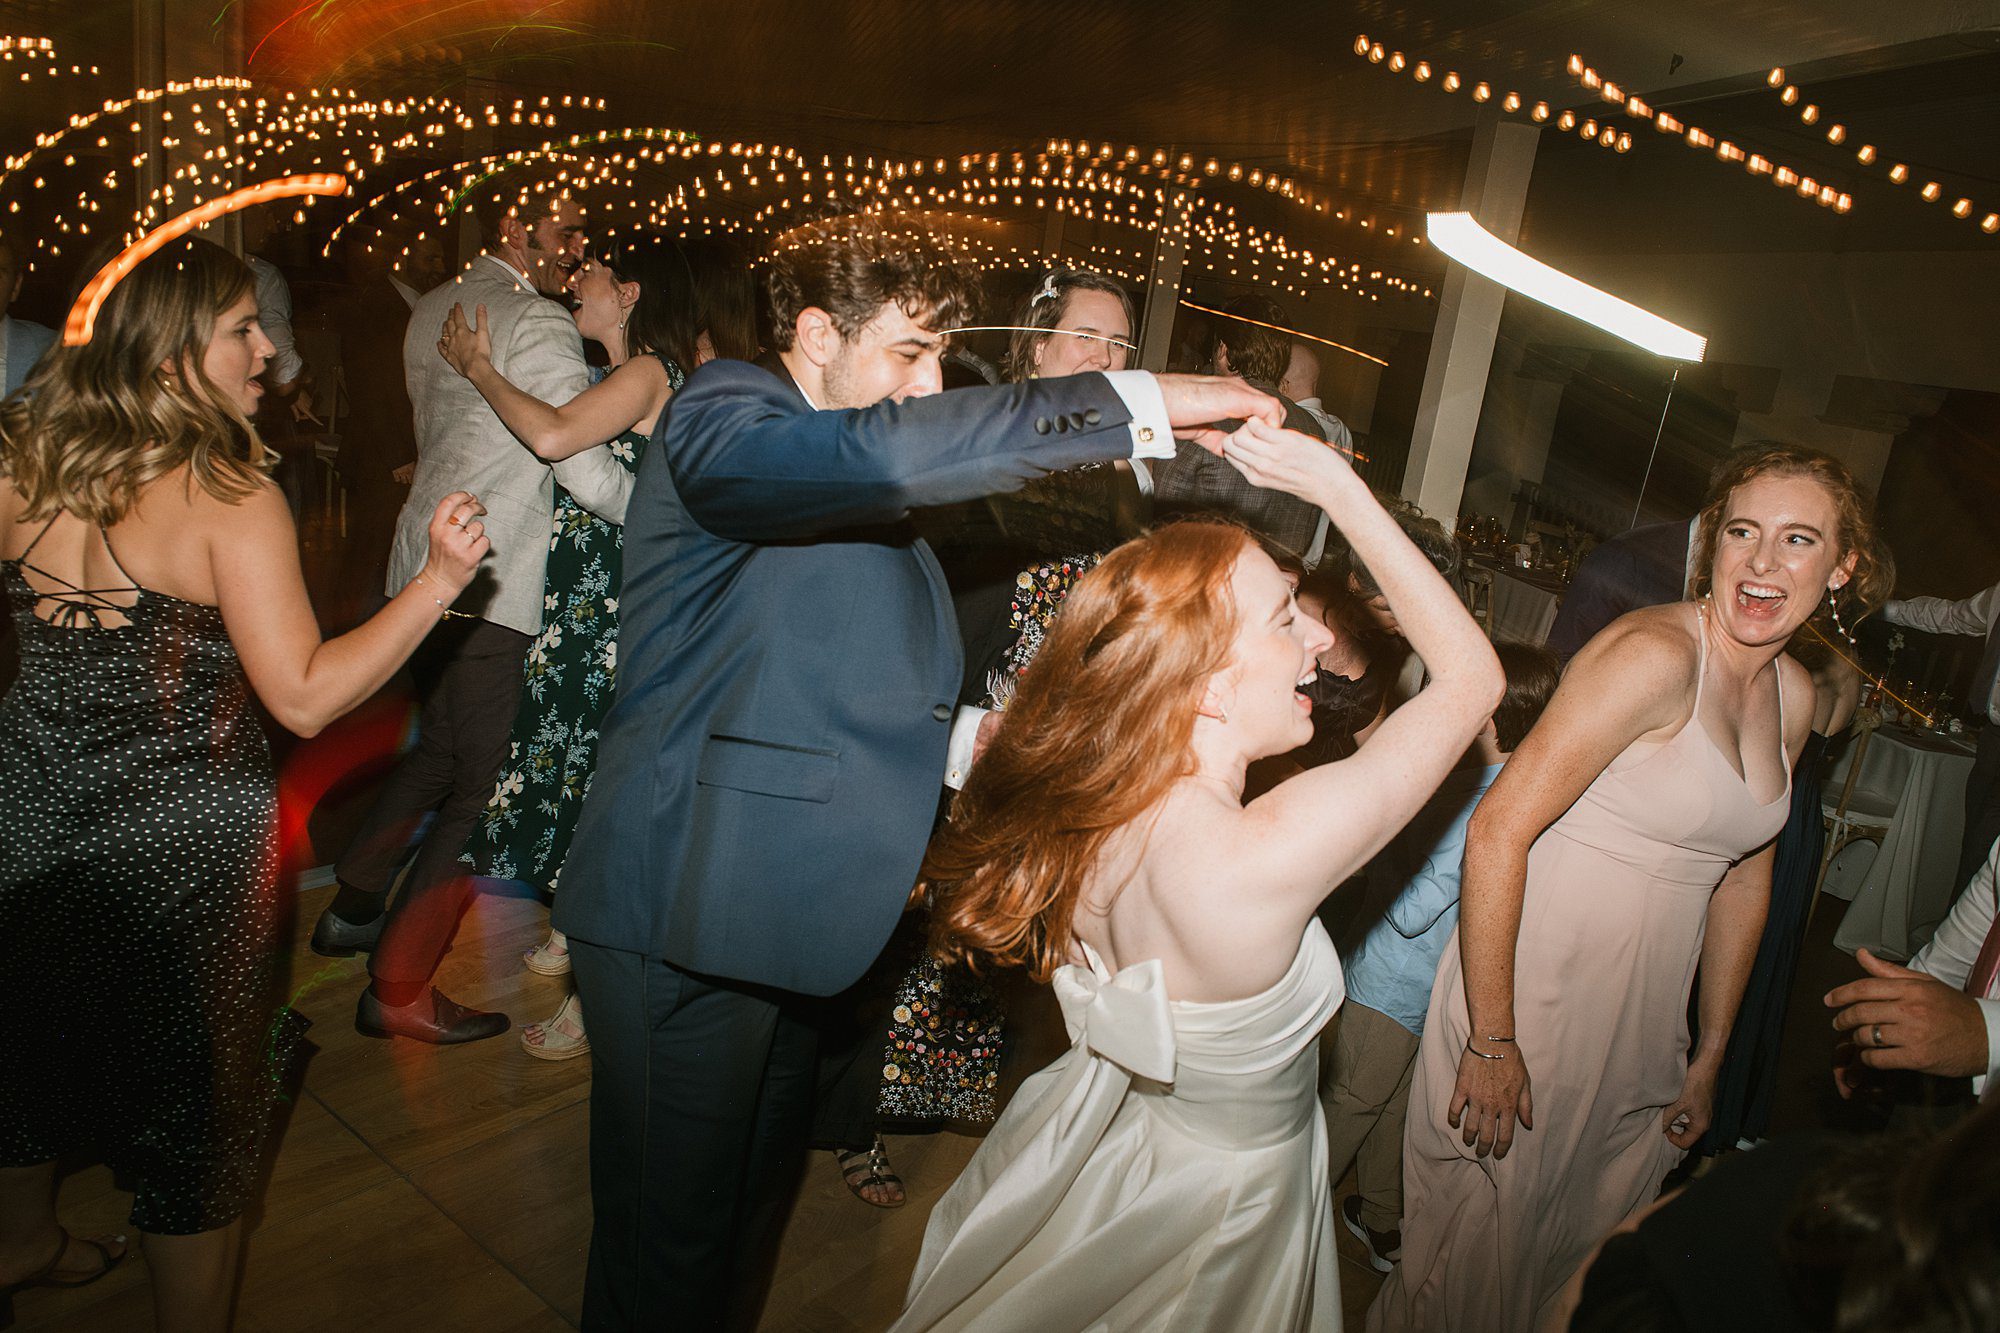 a couples dances the night away on the dance floor of the Washington Park Boathouse